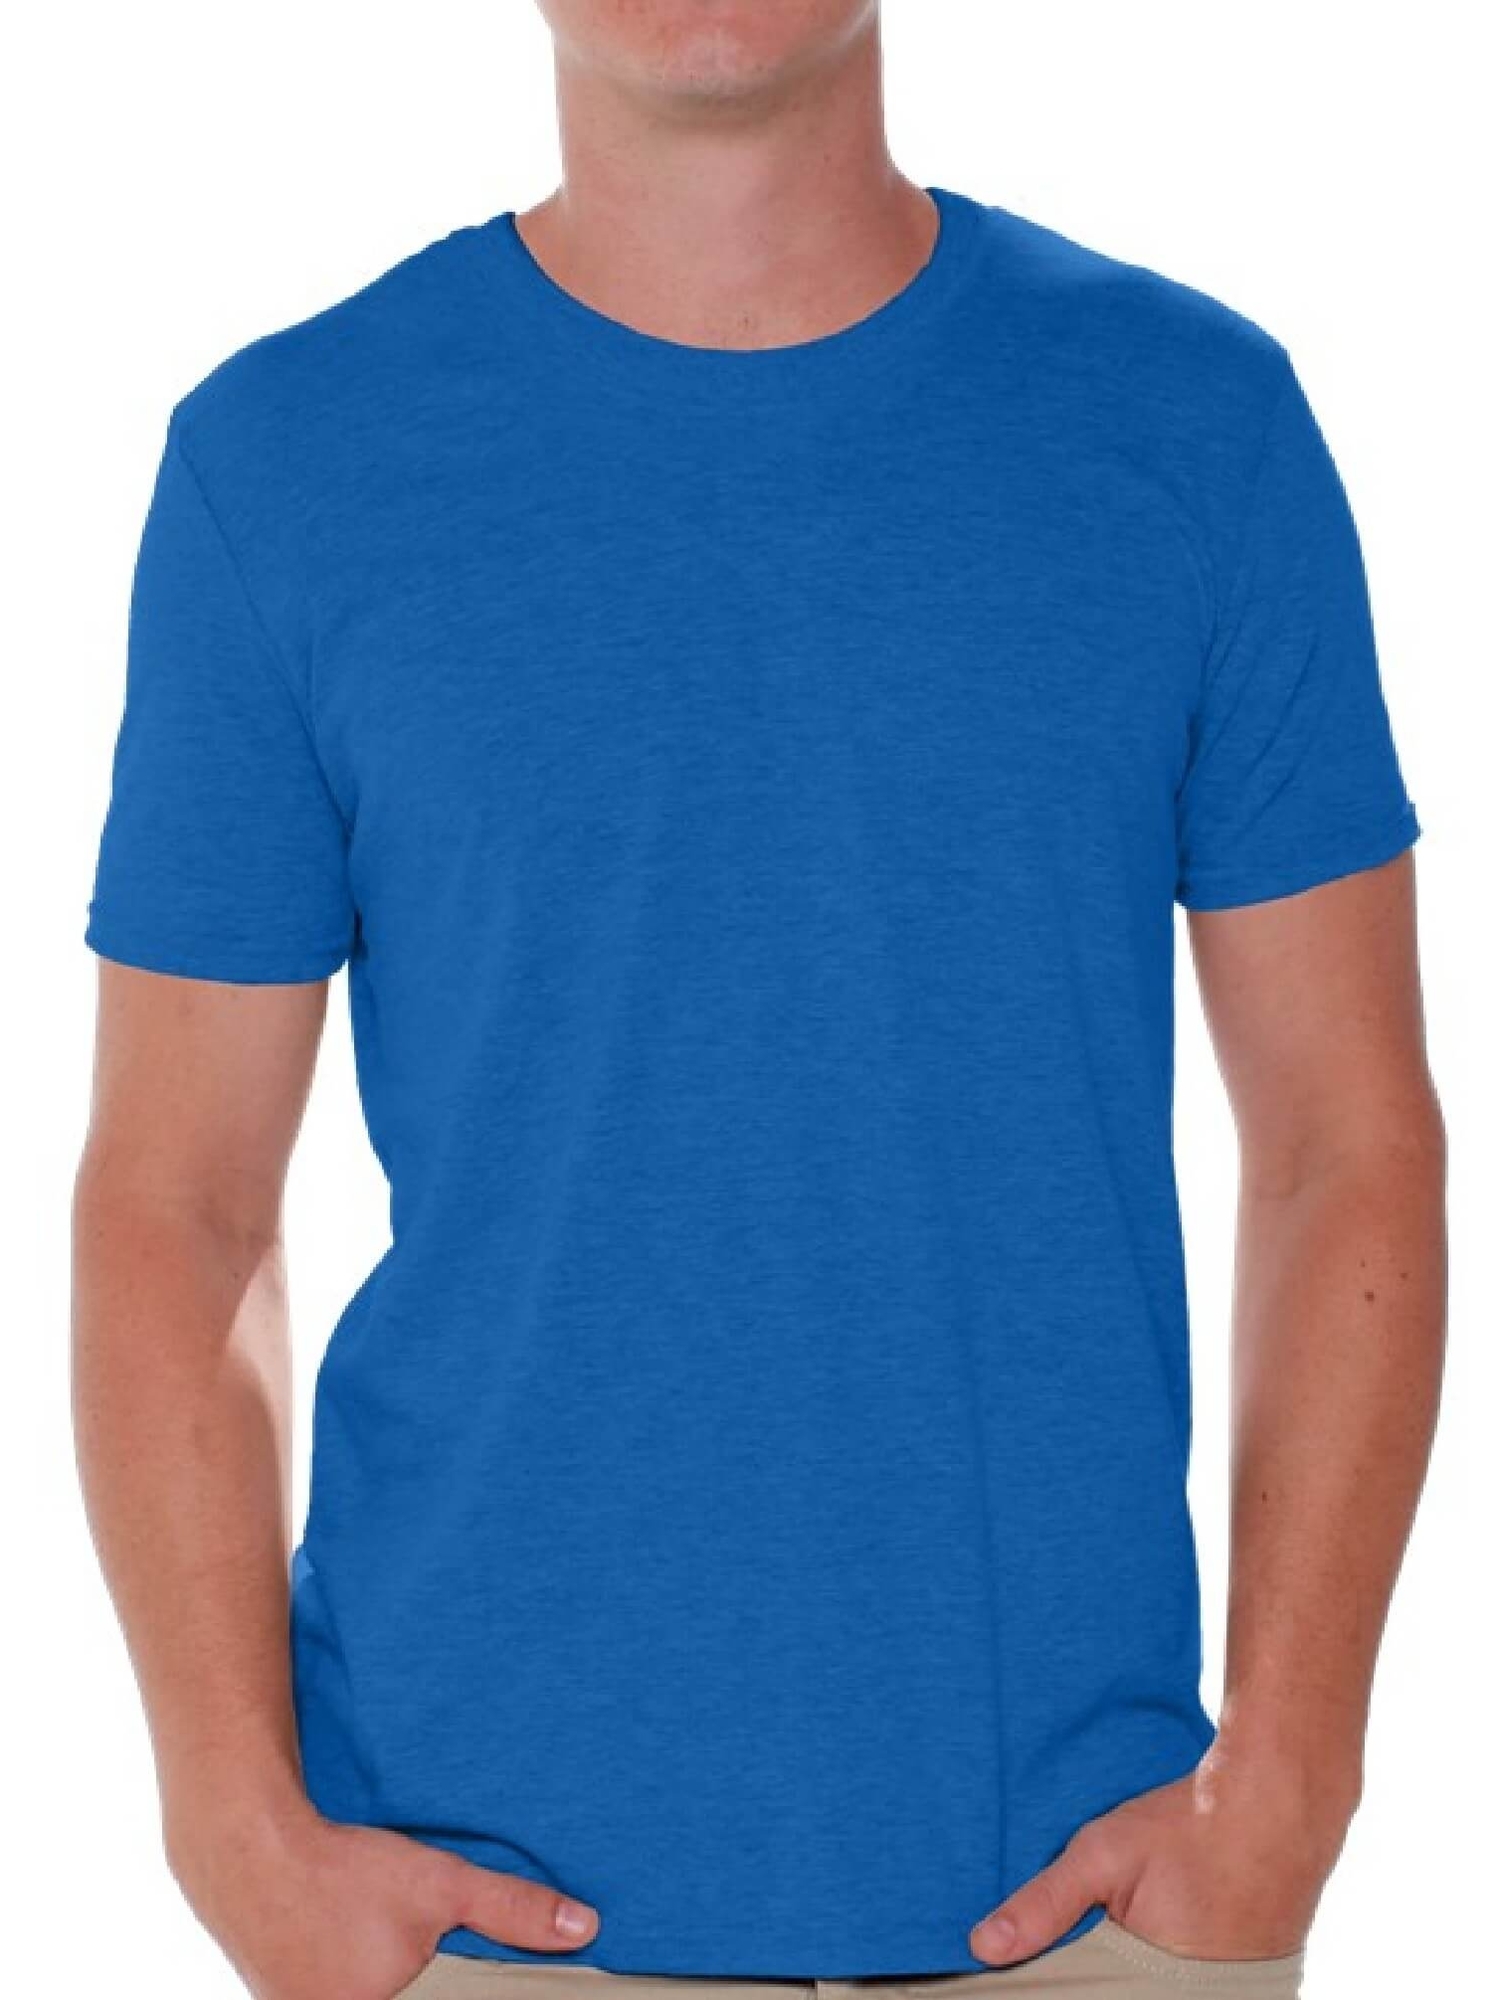 Gildan Shirts for Men Short Sleeve Tshirts Mens Classic Outwear Cotton Men's Shirt Blank Tee Shirts - image 1 of 4